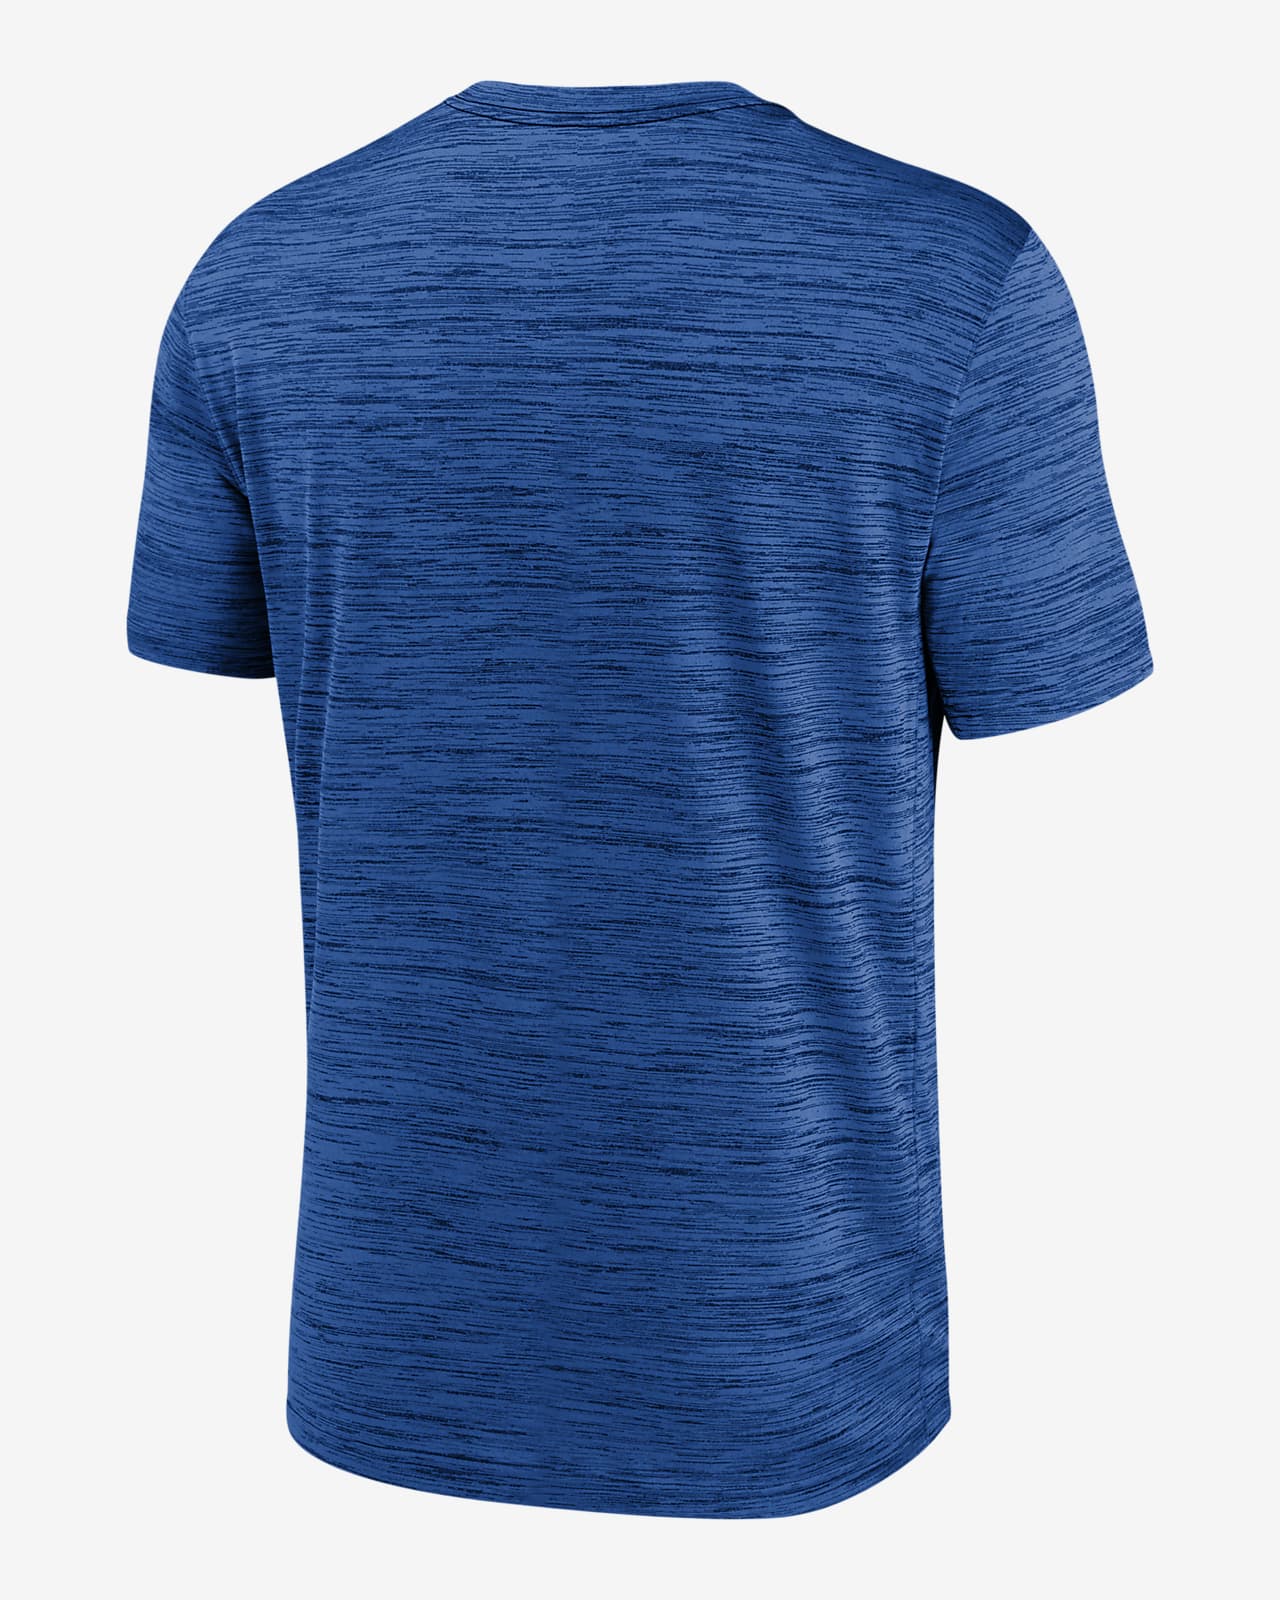 Nike Dri-FIT Sideline Velocity (NFL Indianapolis Colts) Men's T-Shirt